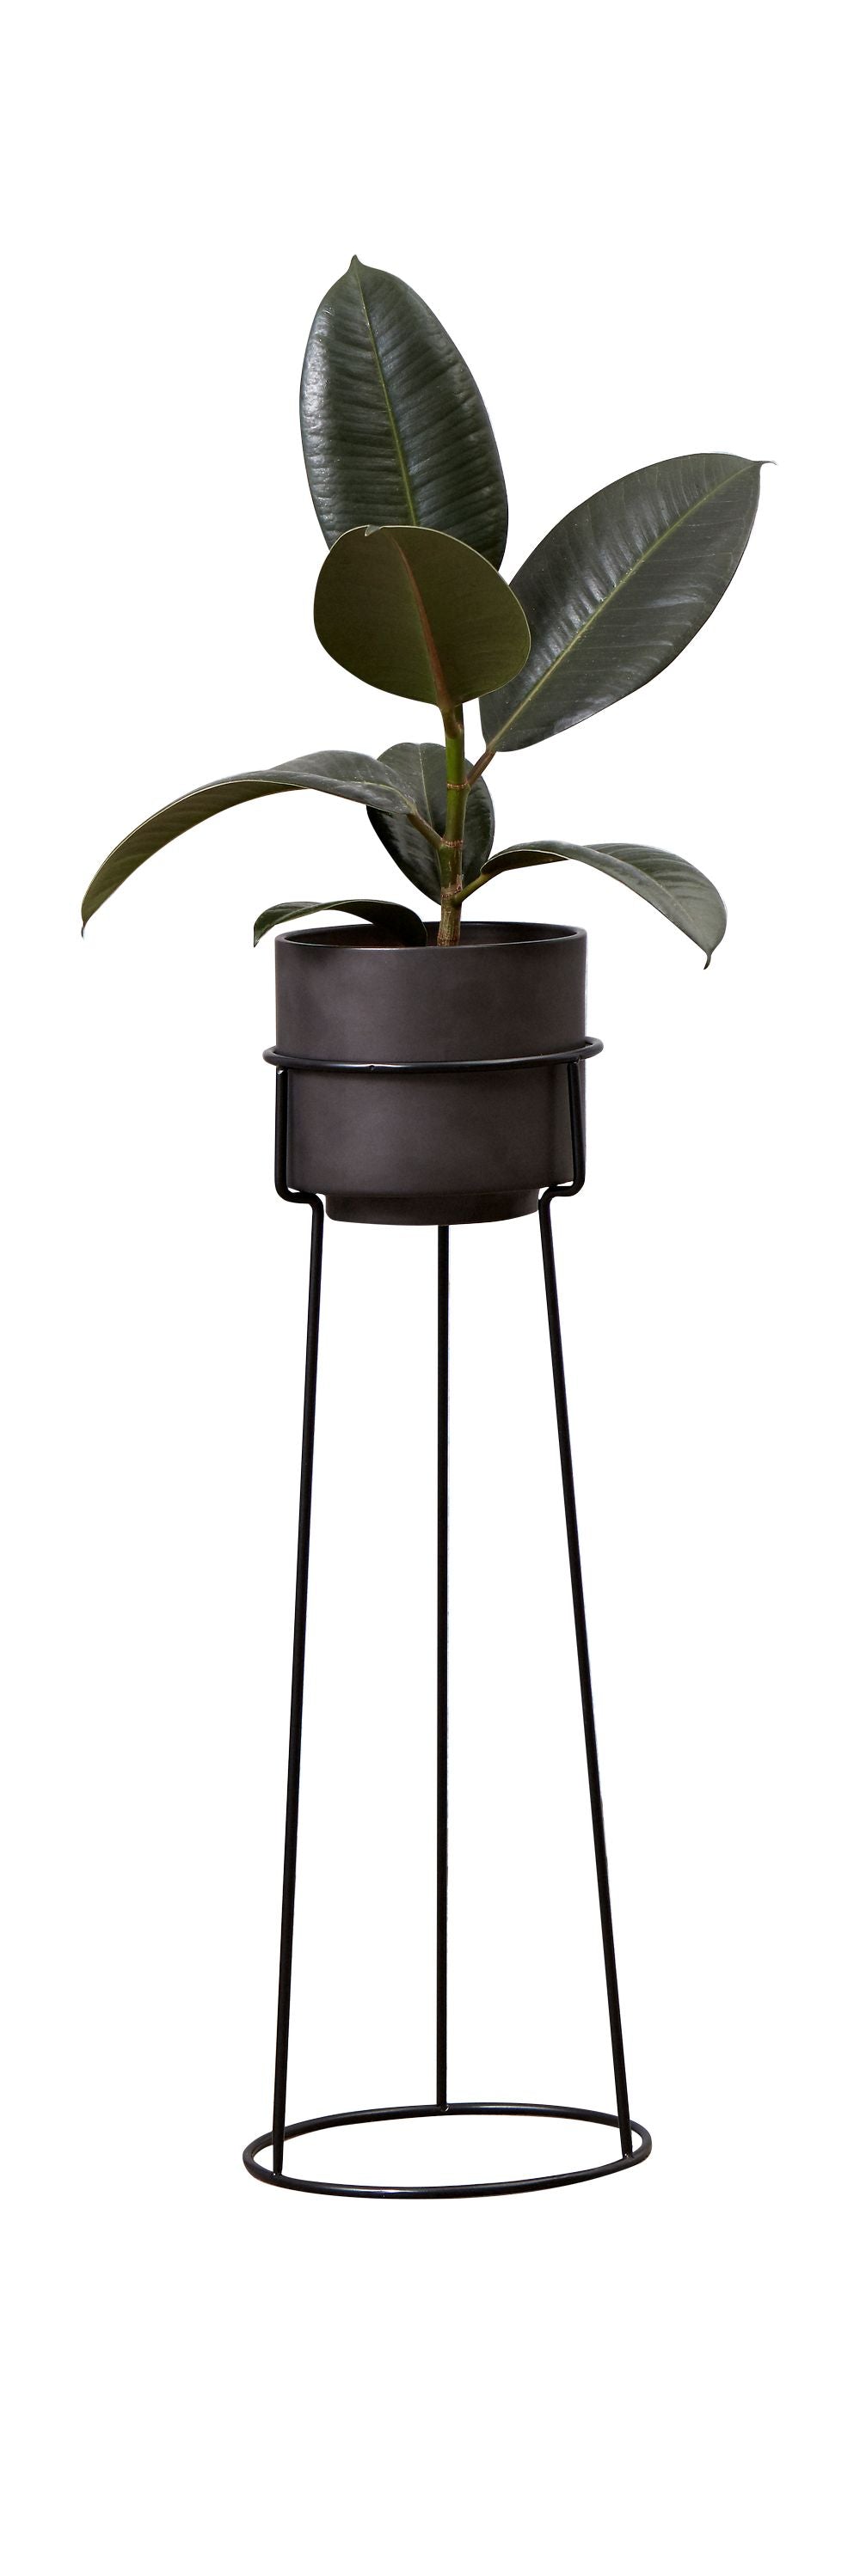 Andersen Furniture En växtblommor, h 48 cm